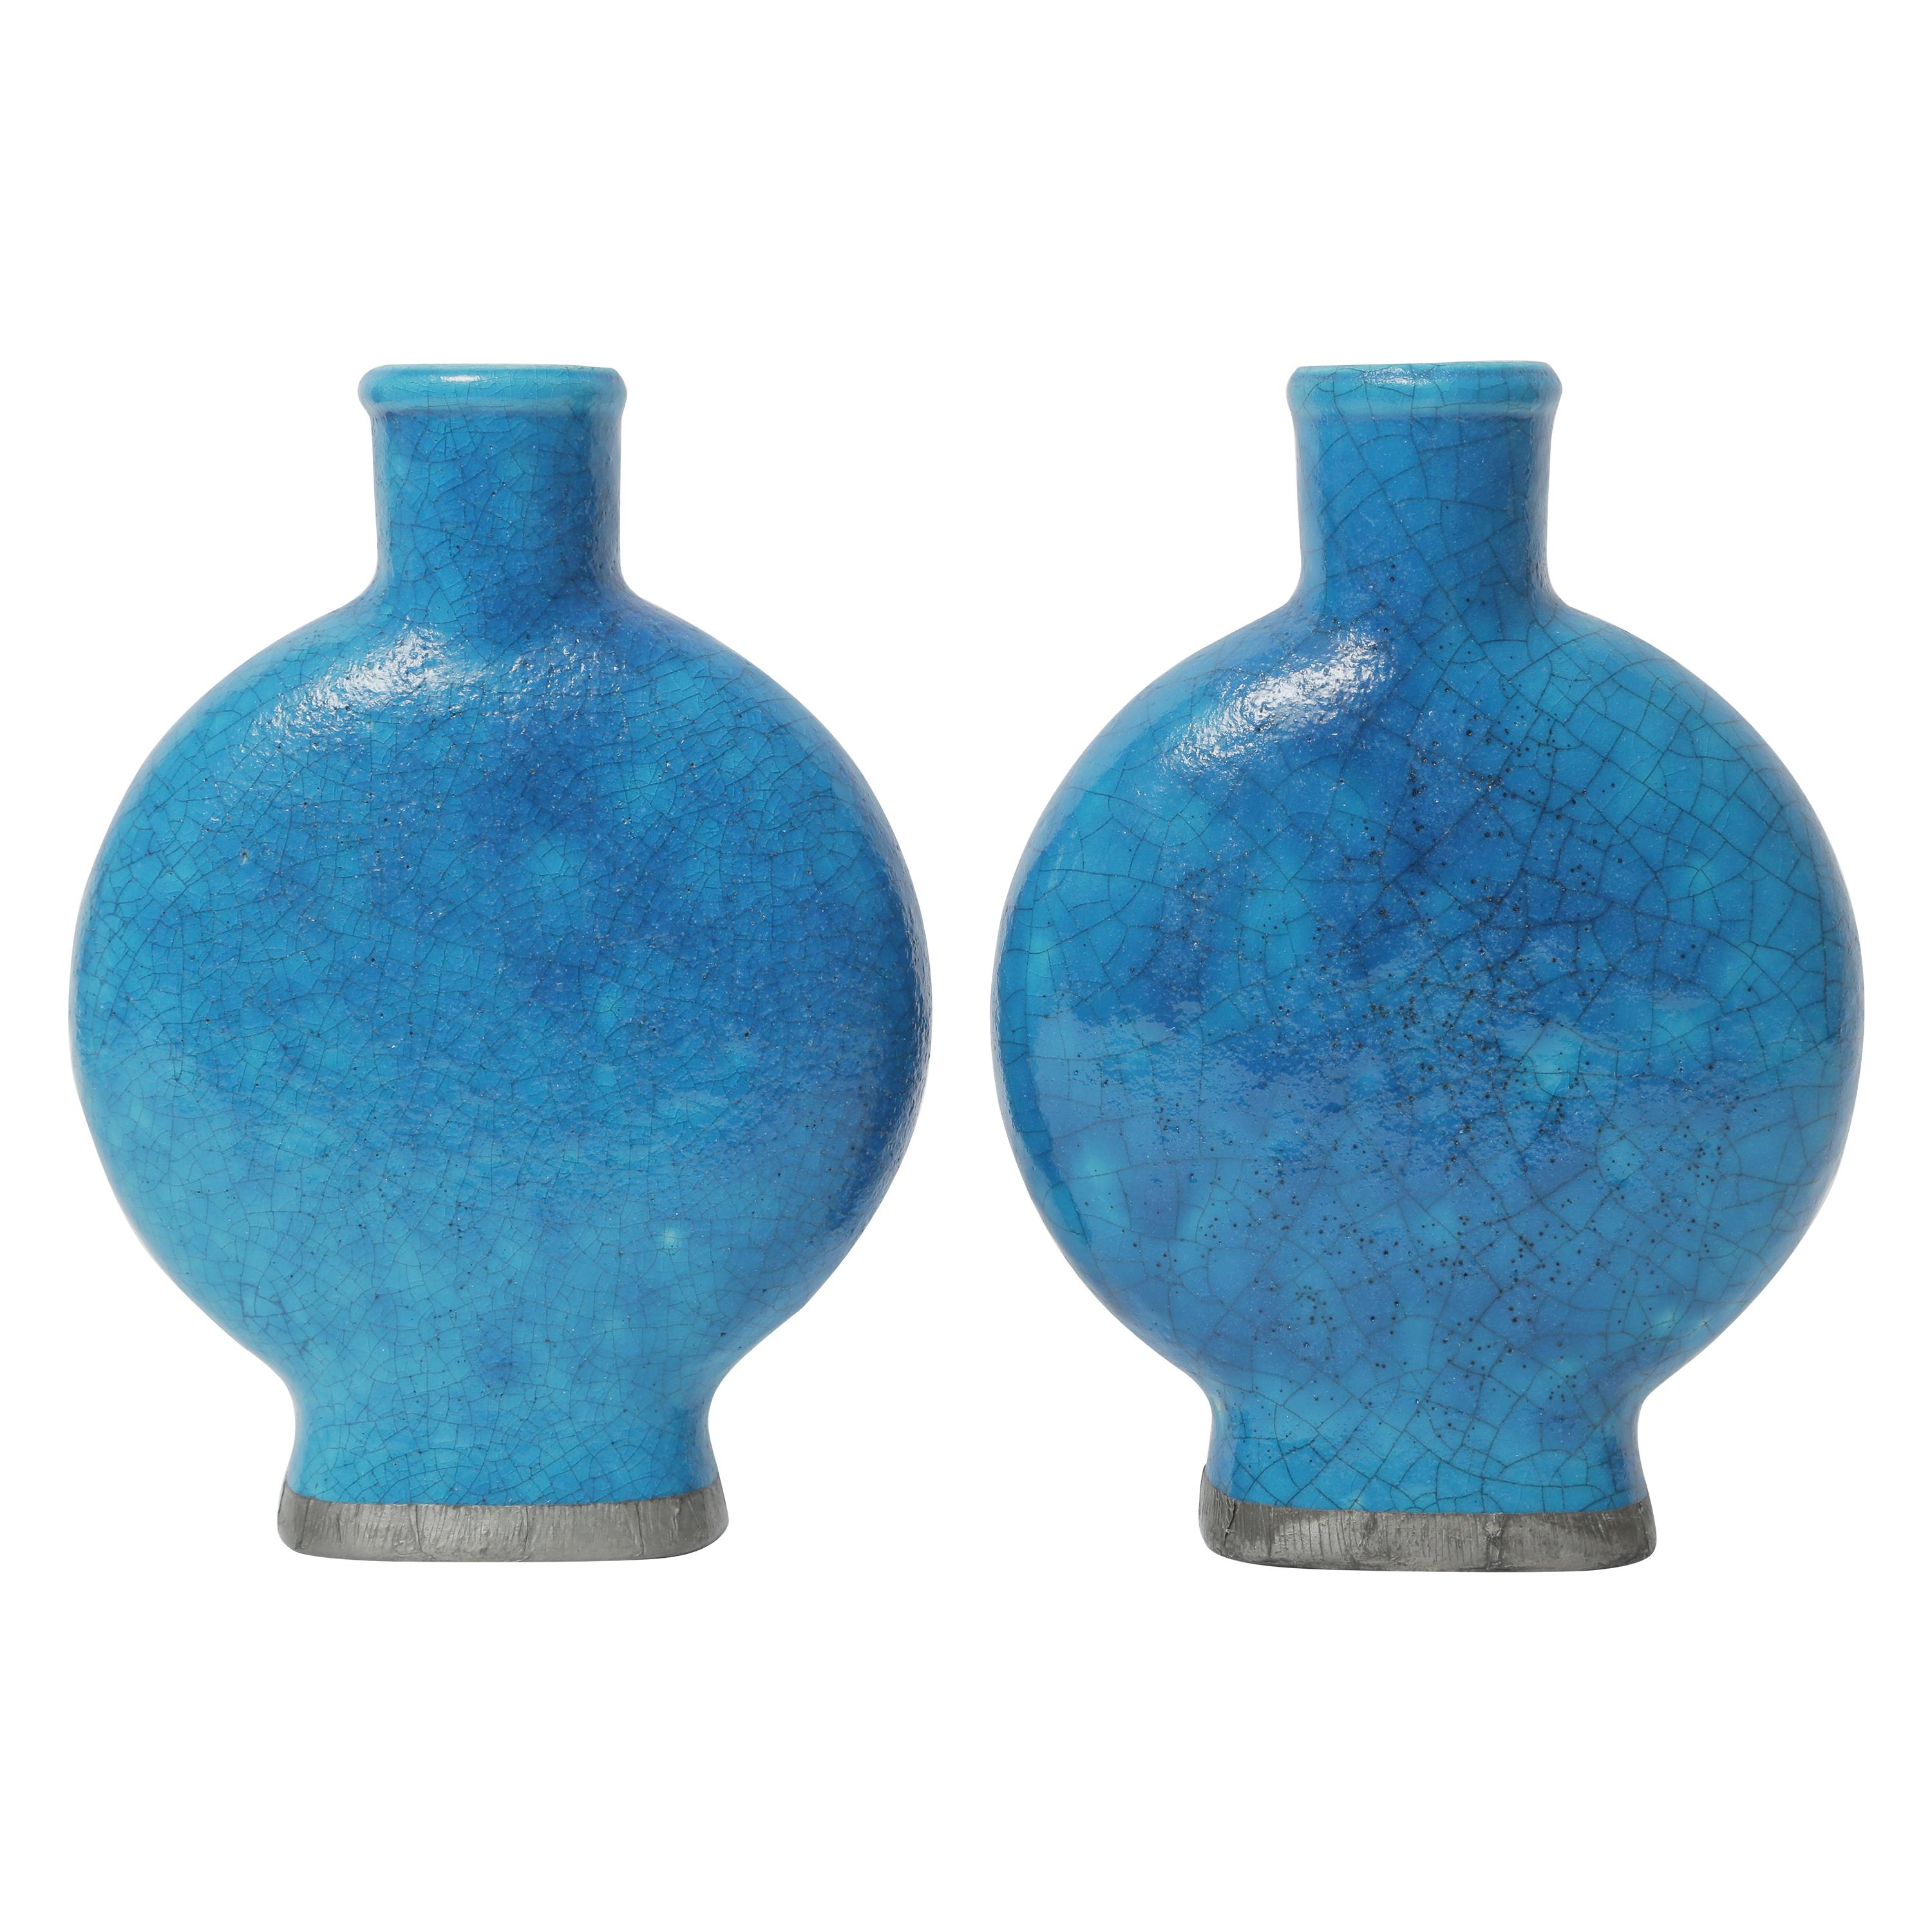 Pair of Turquoise Vases, Edmond Lachenal Signed. Art Deco Period, Rare